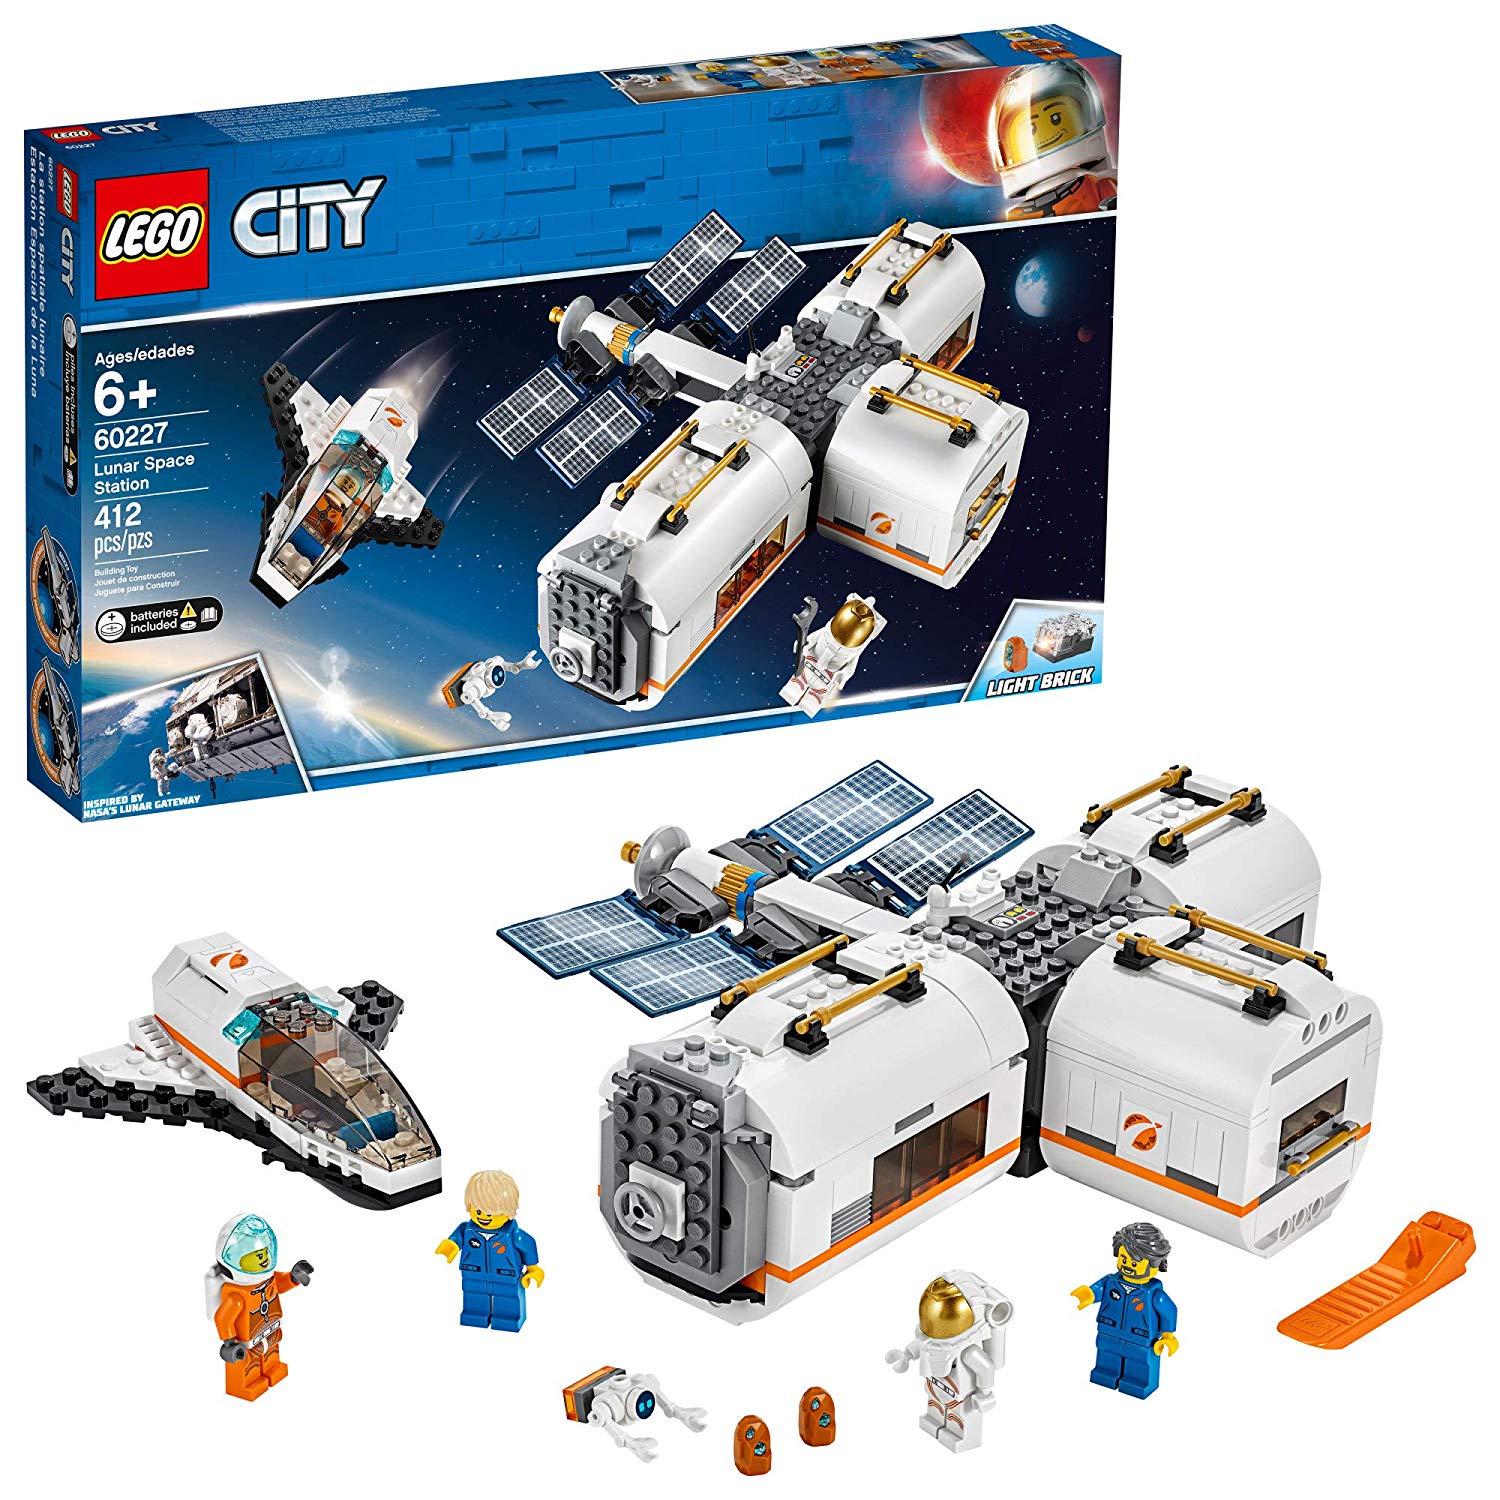 Lego City Space 60227 Lunar Space Station (412 Pieces)